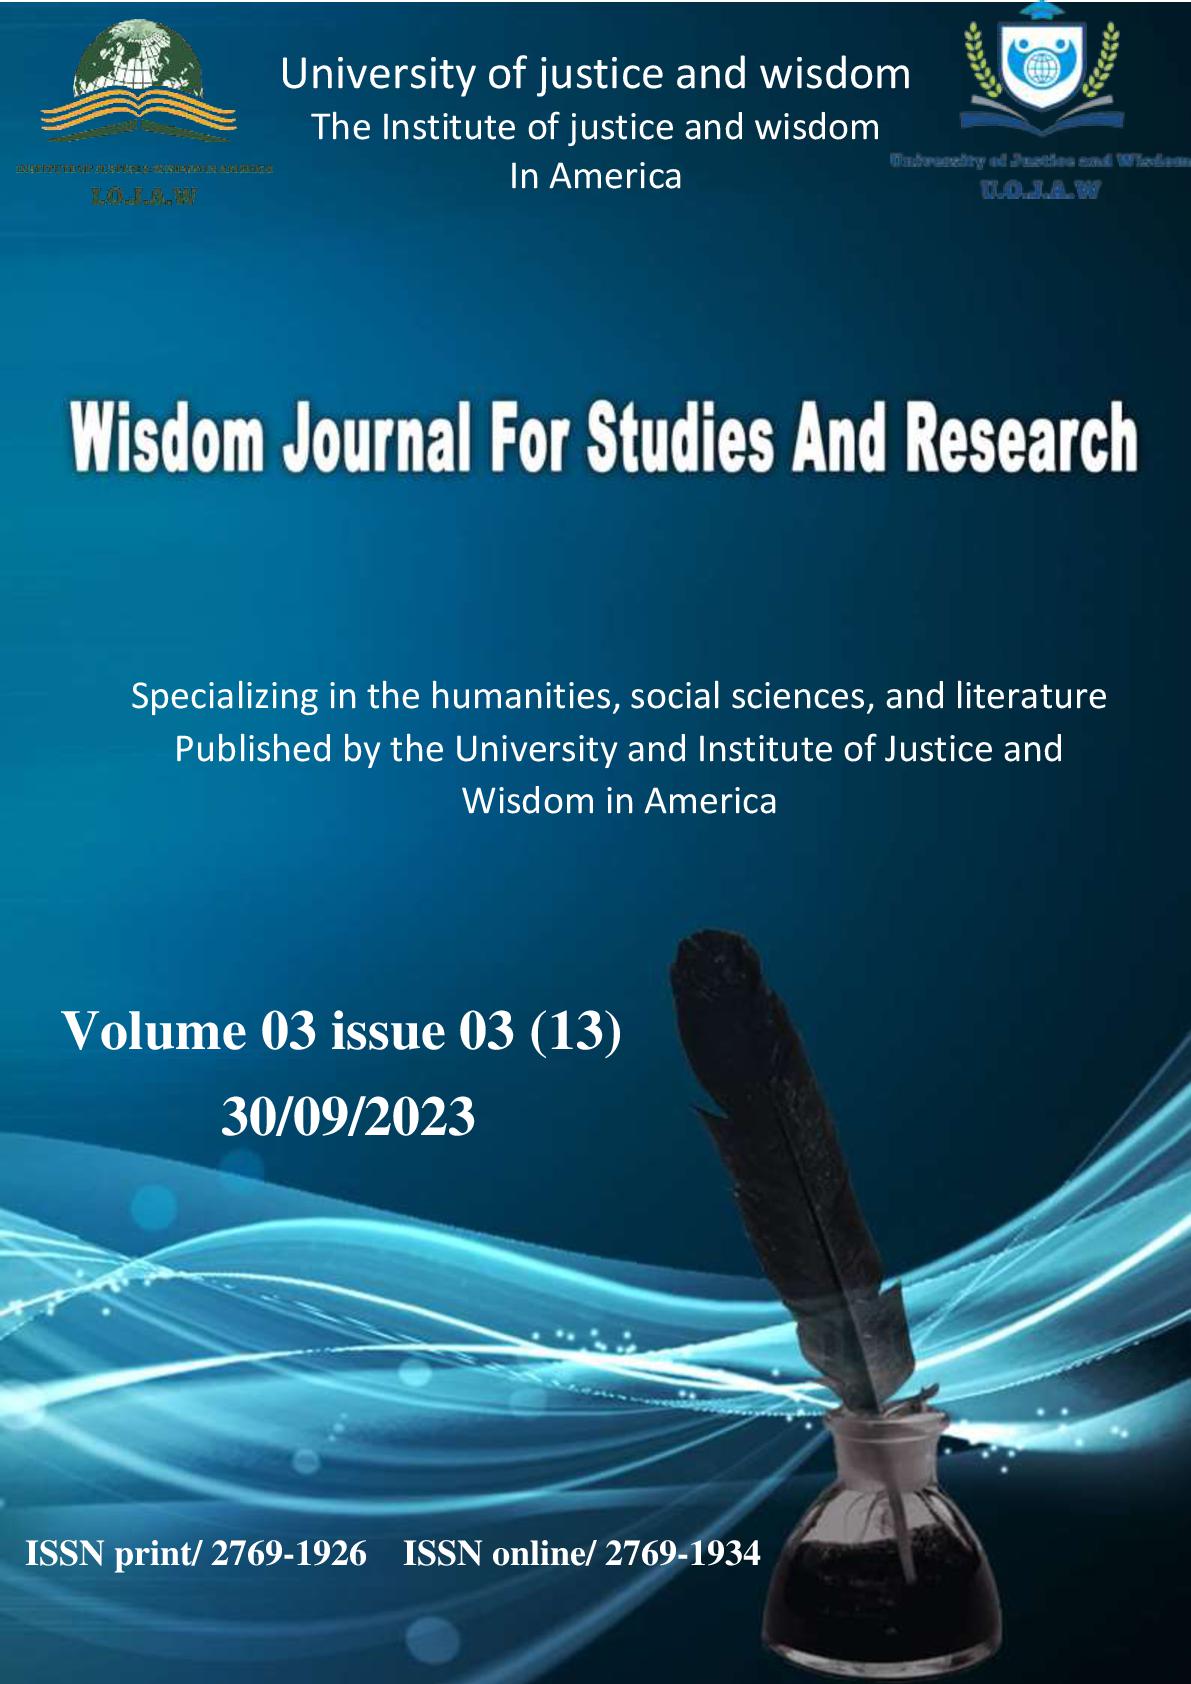 					View Vol. 3 No. 03 (2023): Wisdom Journal For Studies & Research (WJFSAR) volume 03 n 03(13) 30/09/2023
				